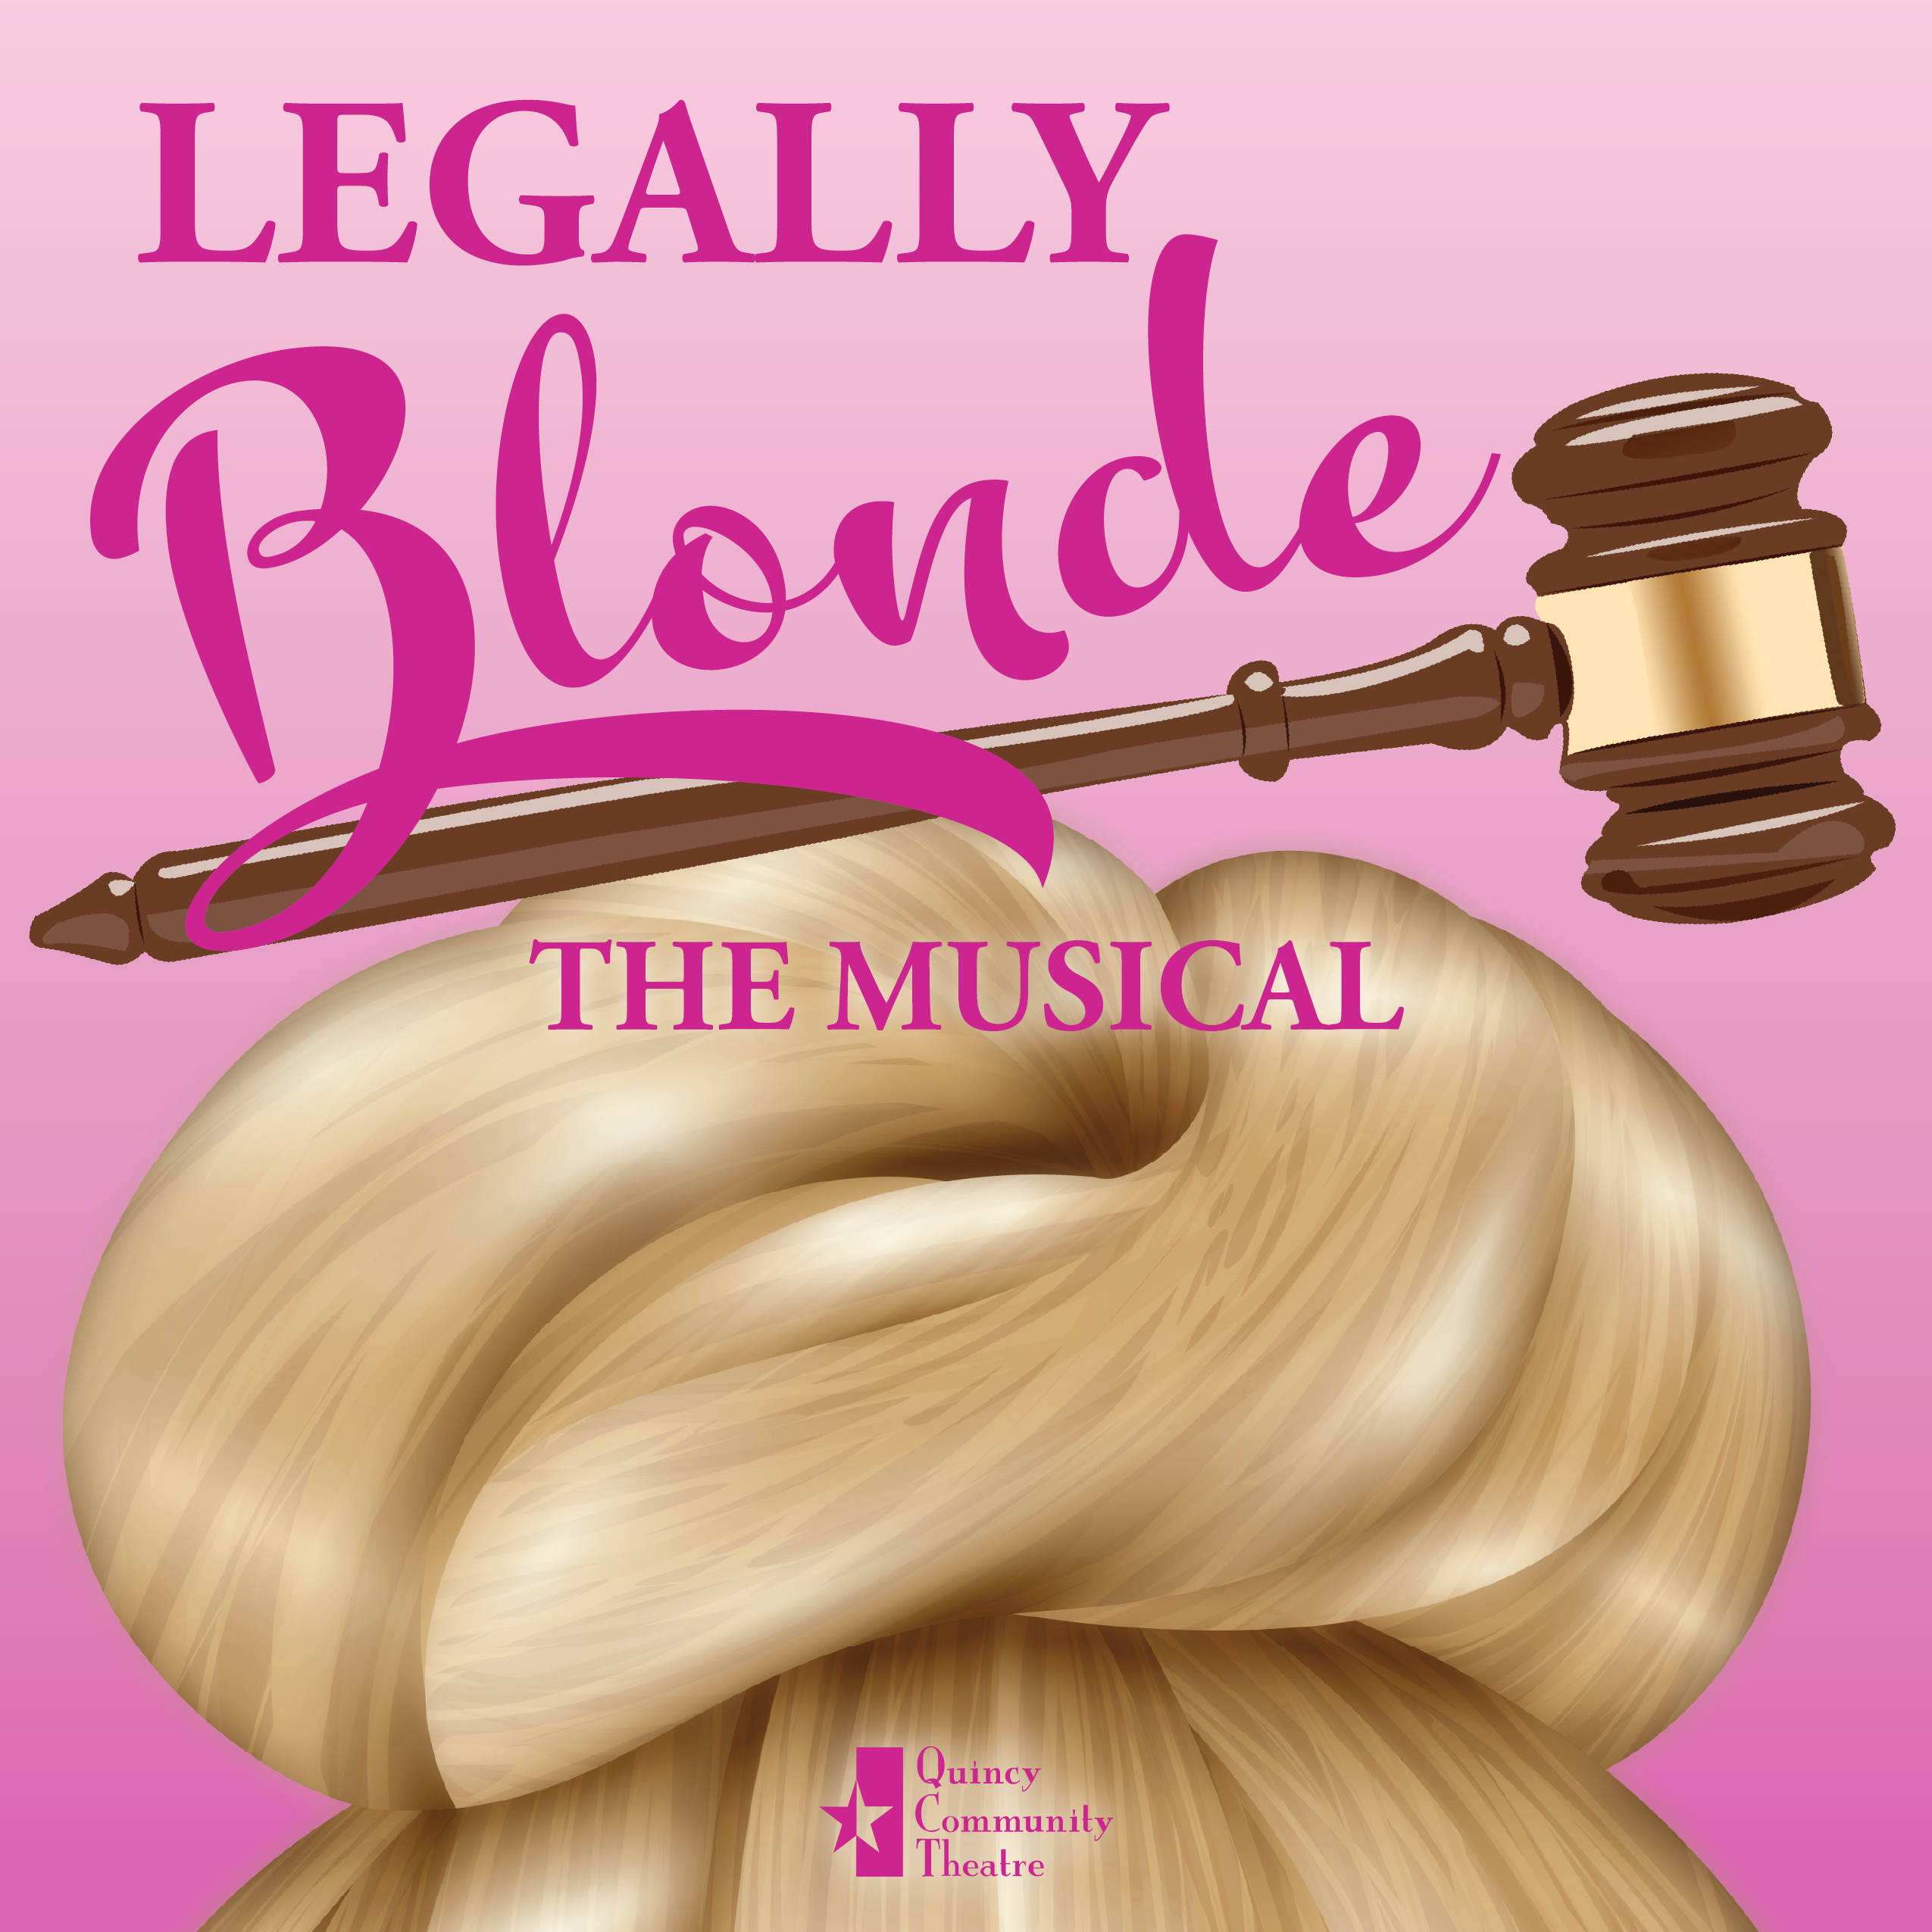 Legally blonde